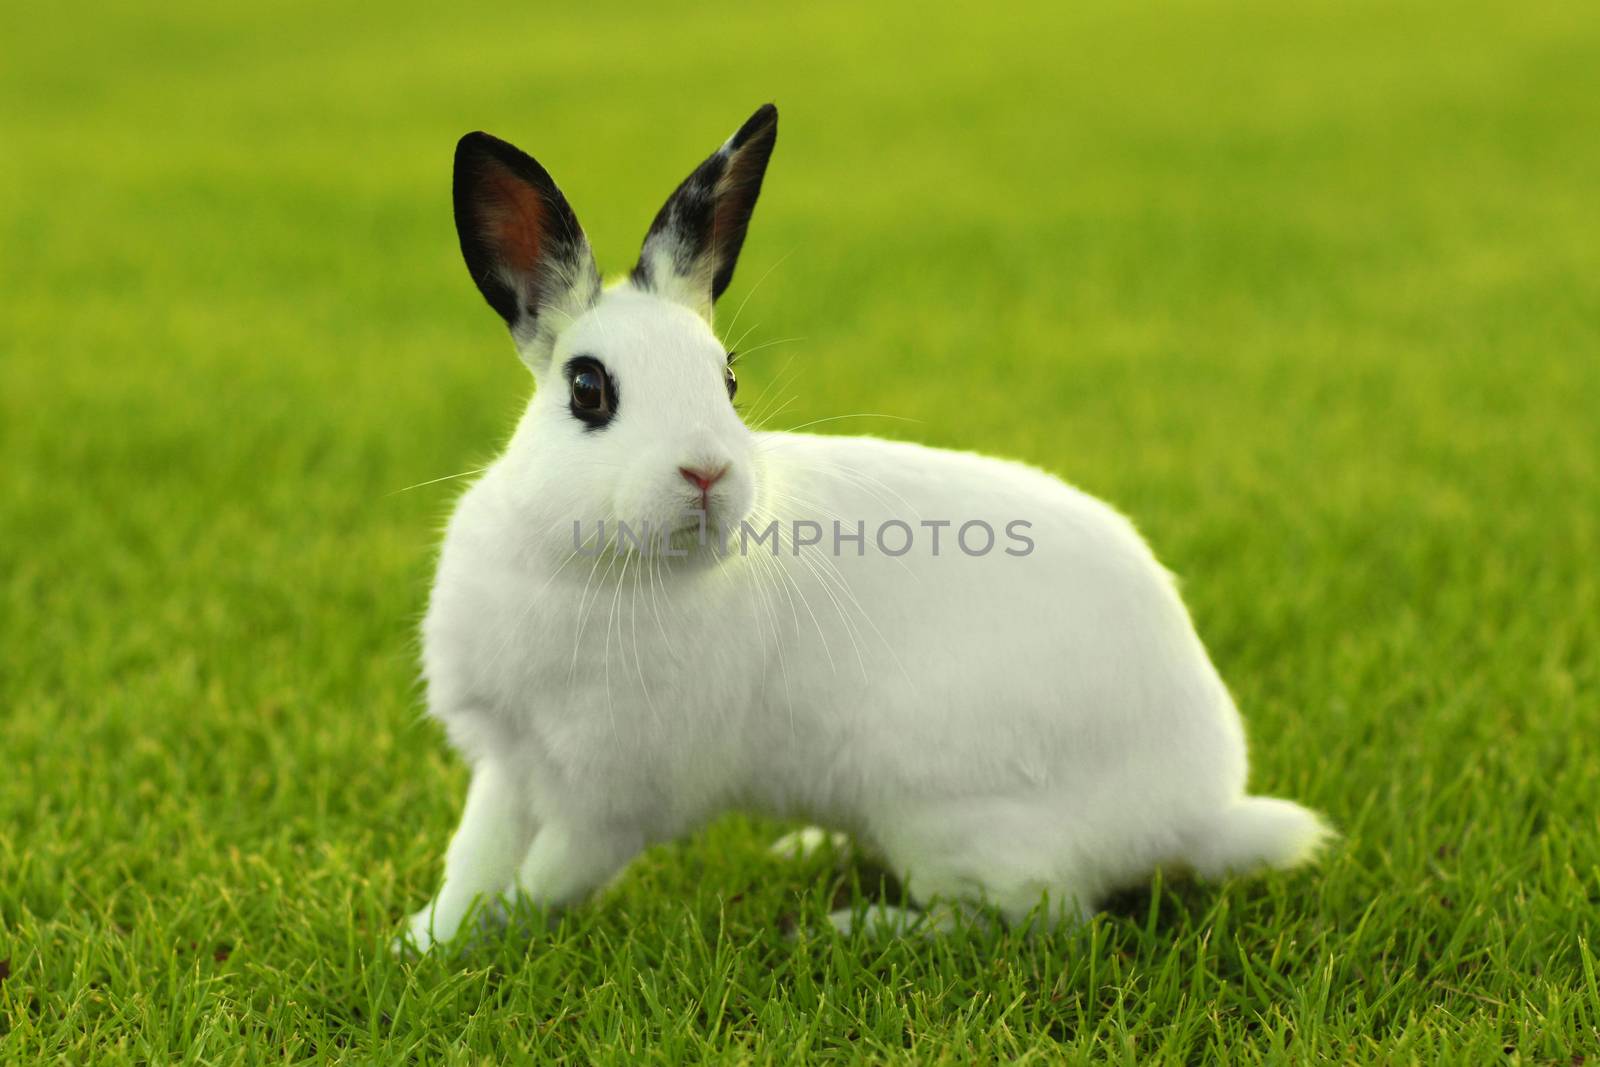  White Bunny Rabbit Outdoors in Grass by tobkatrina